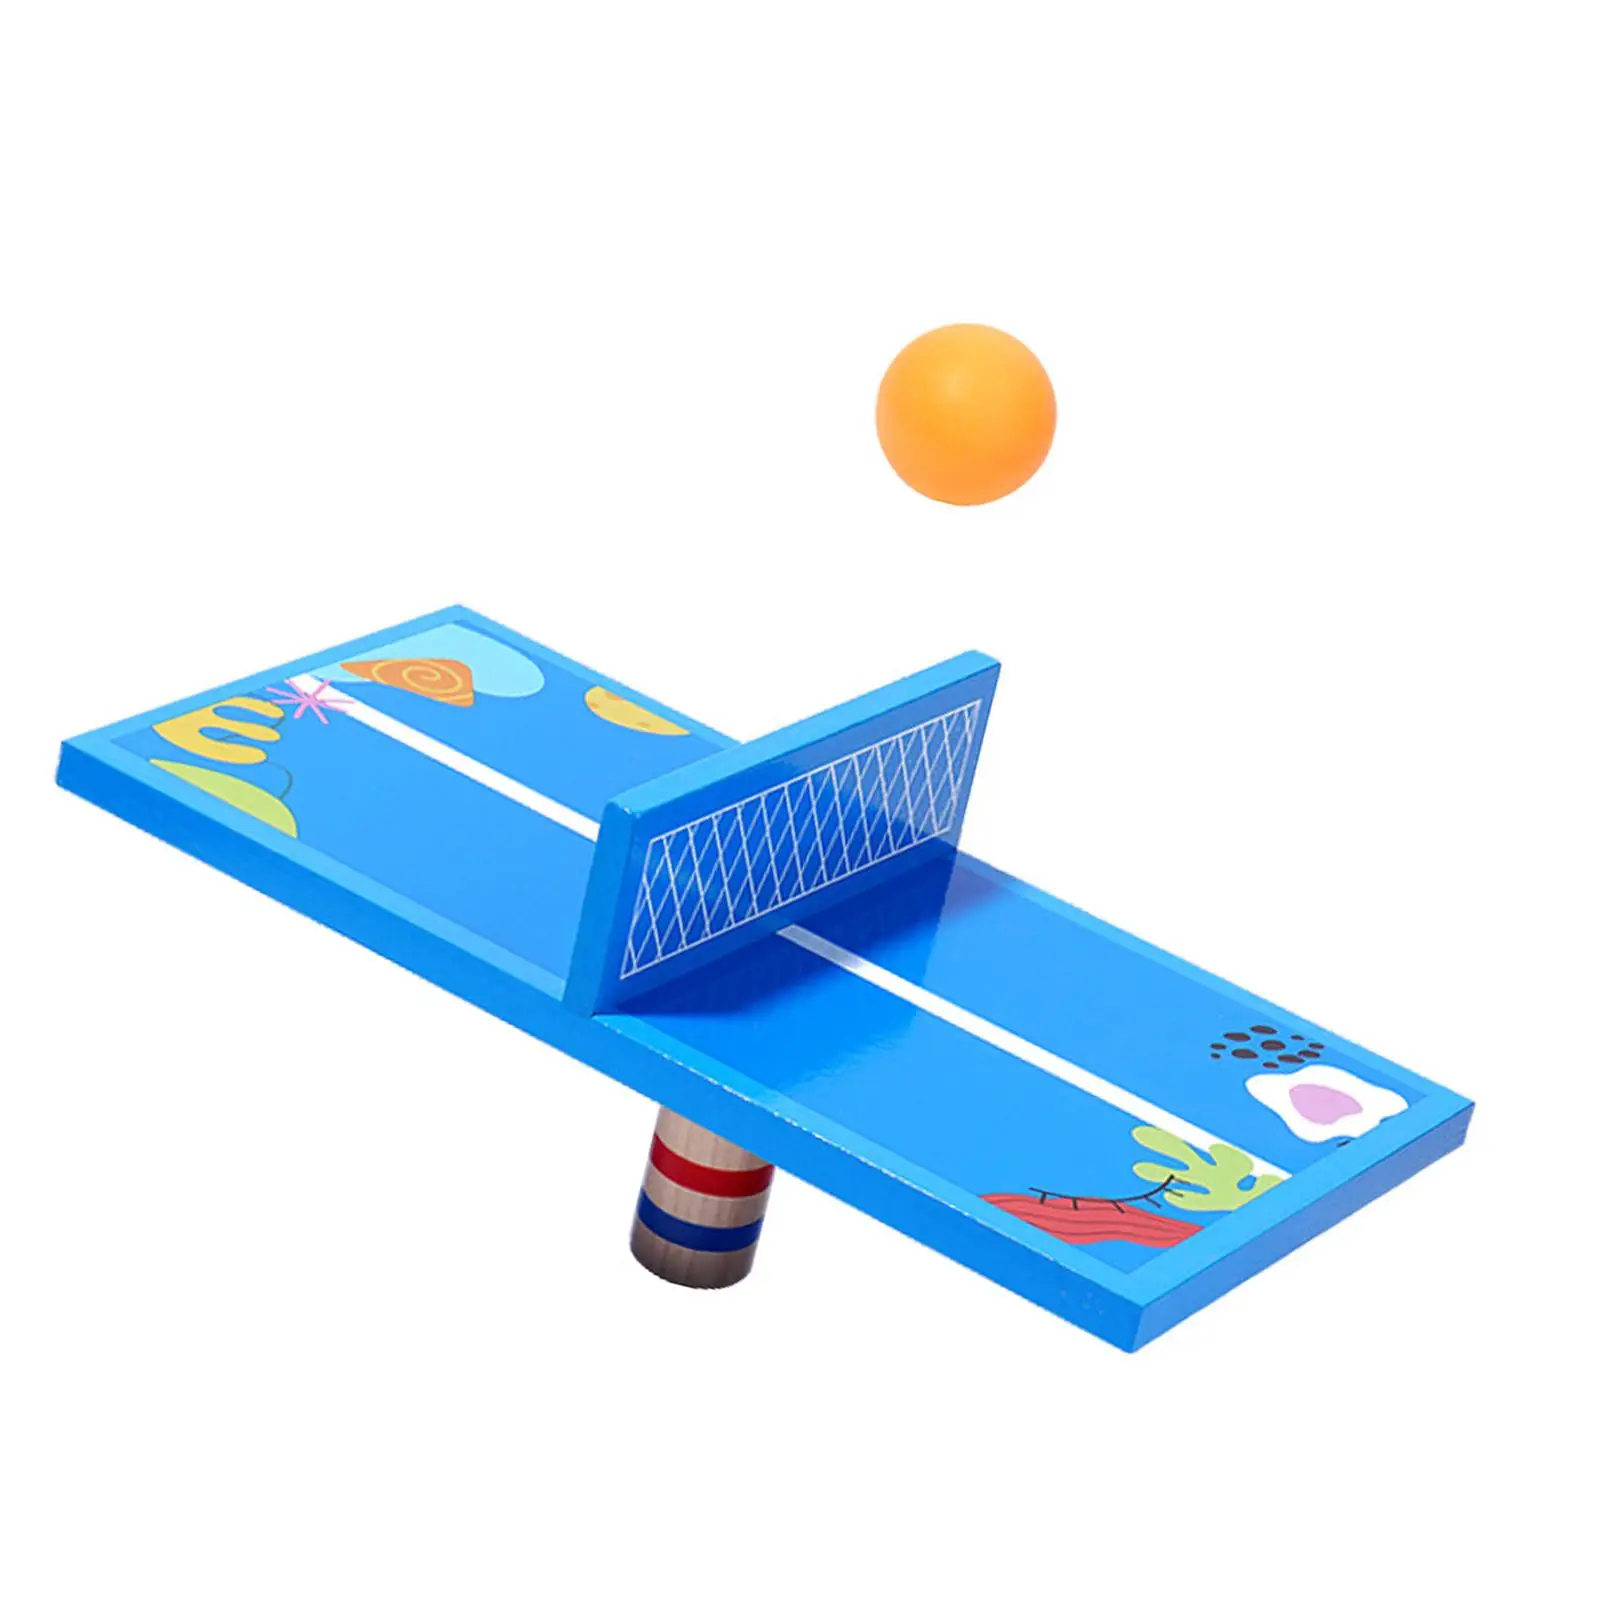 Wooden Mini Pingpong Table Game Portable Tabletop Game Desktop Sport Board for Girls Kids Children